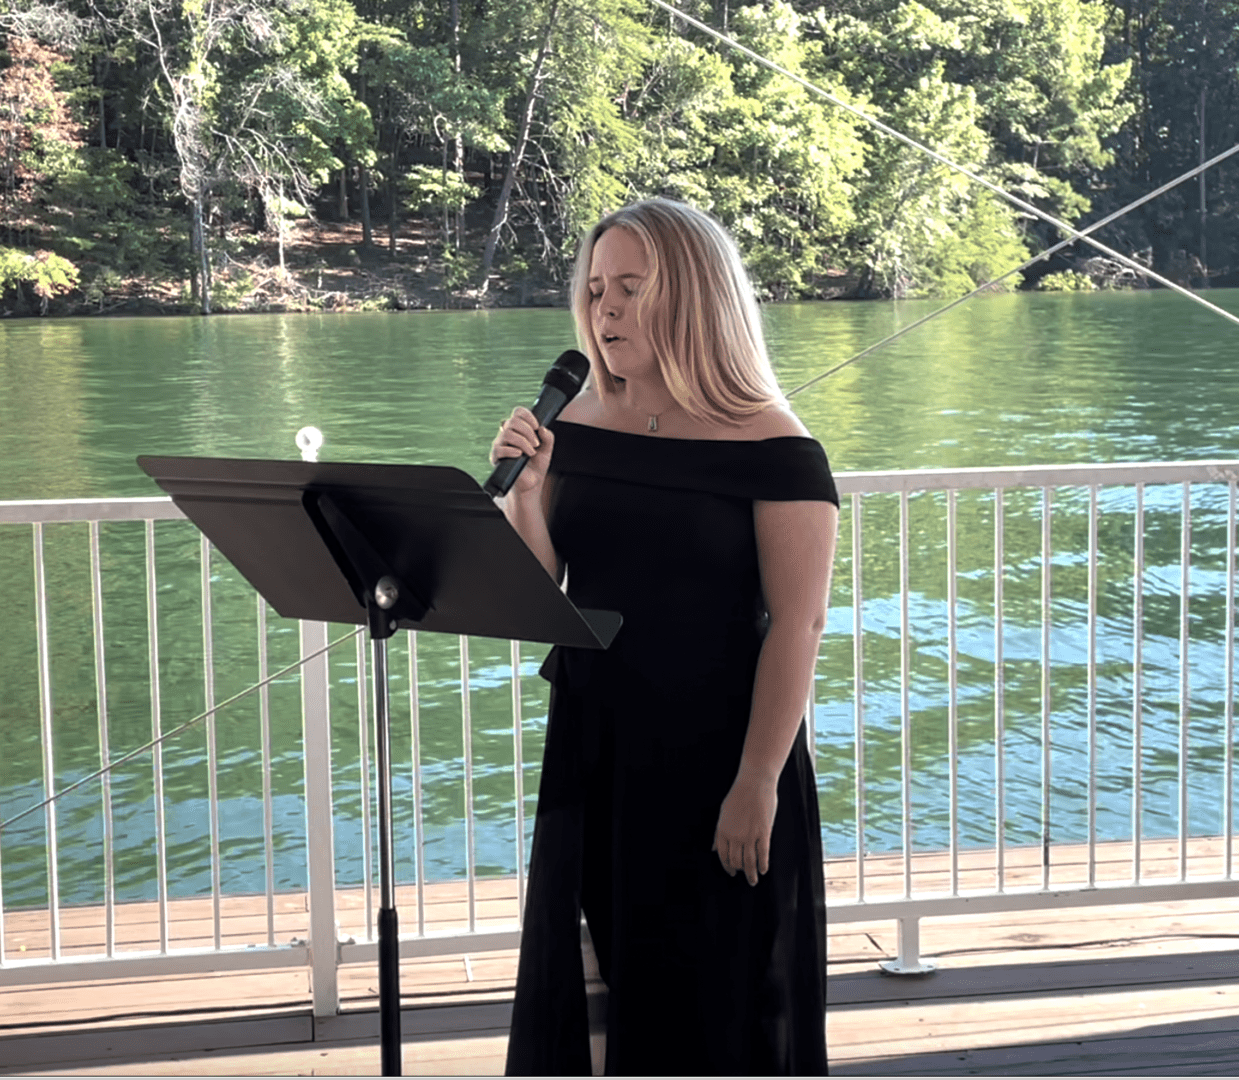 a lady in a black dress singing near a river